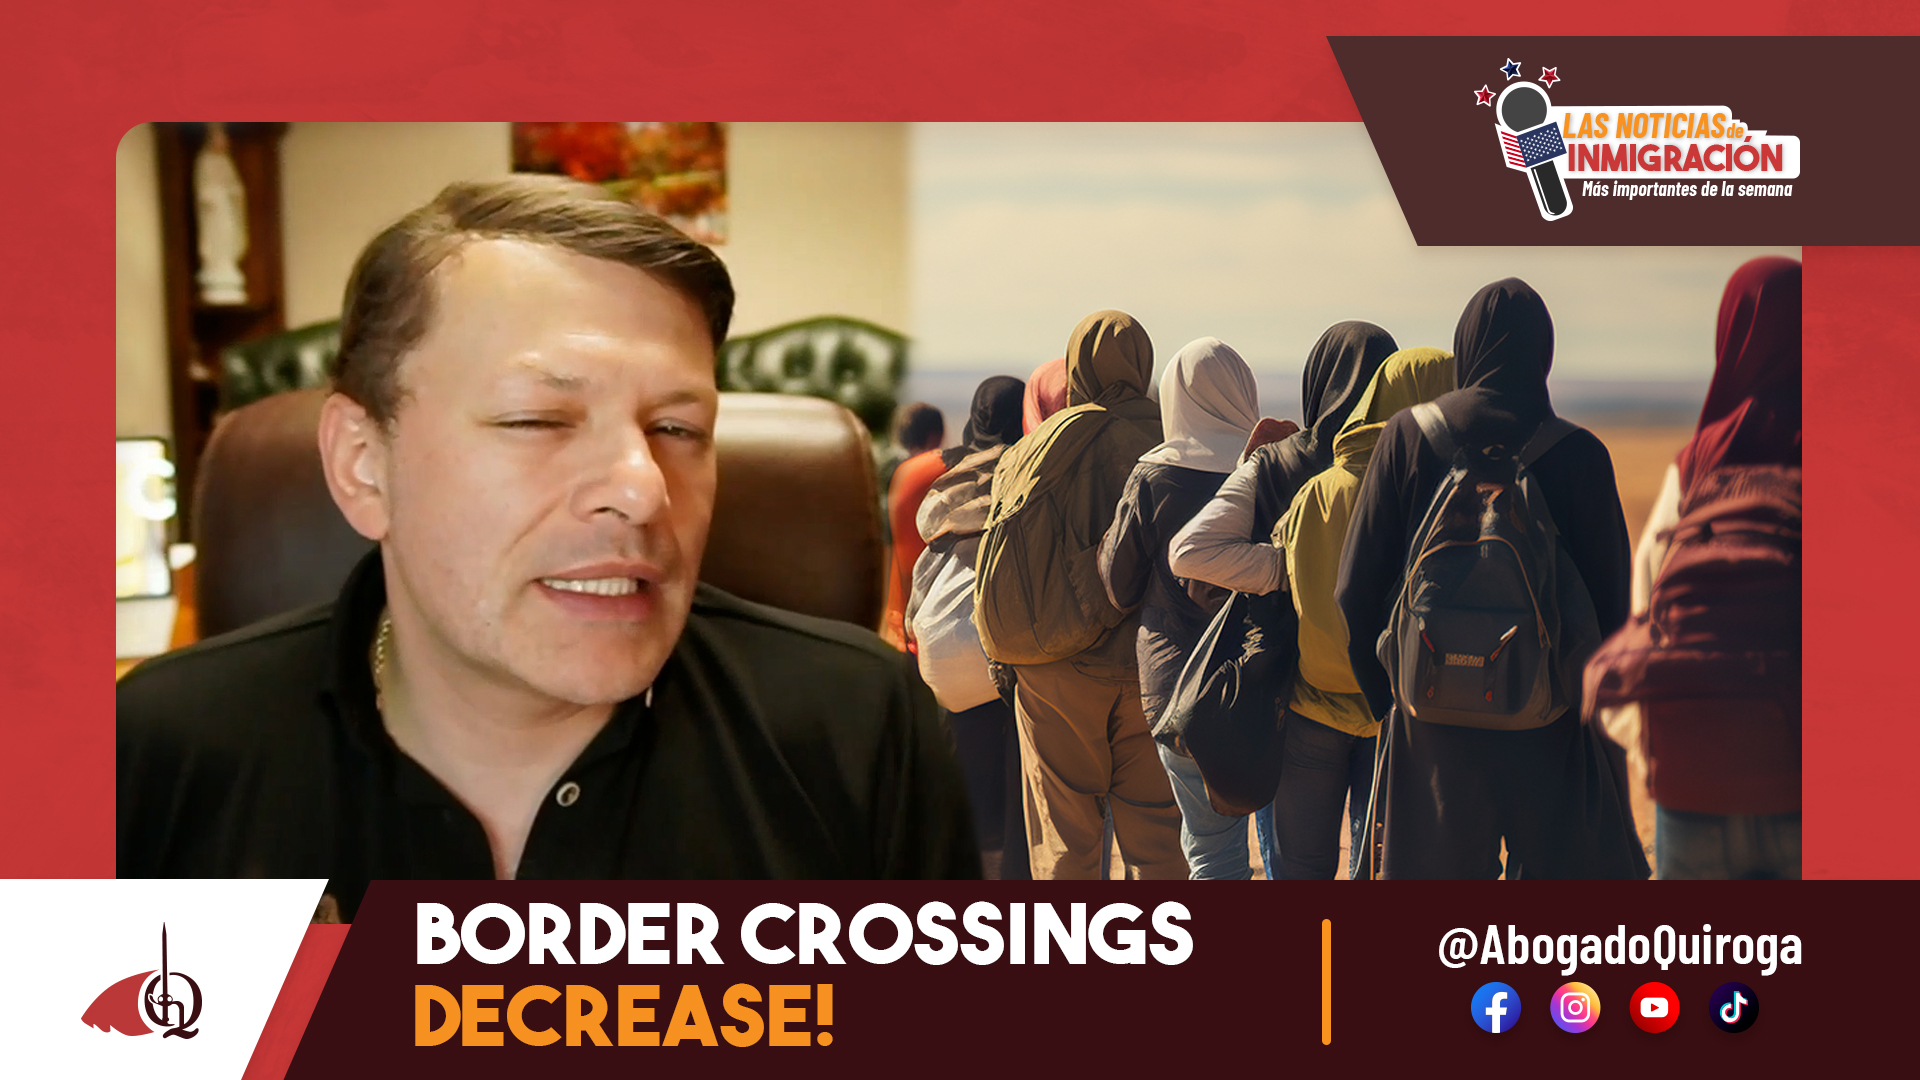 Border crossings decrease due to impact of new asylum measures